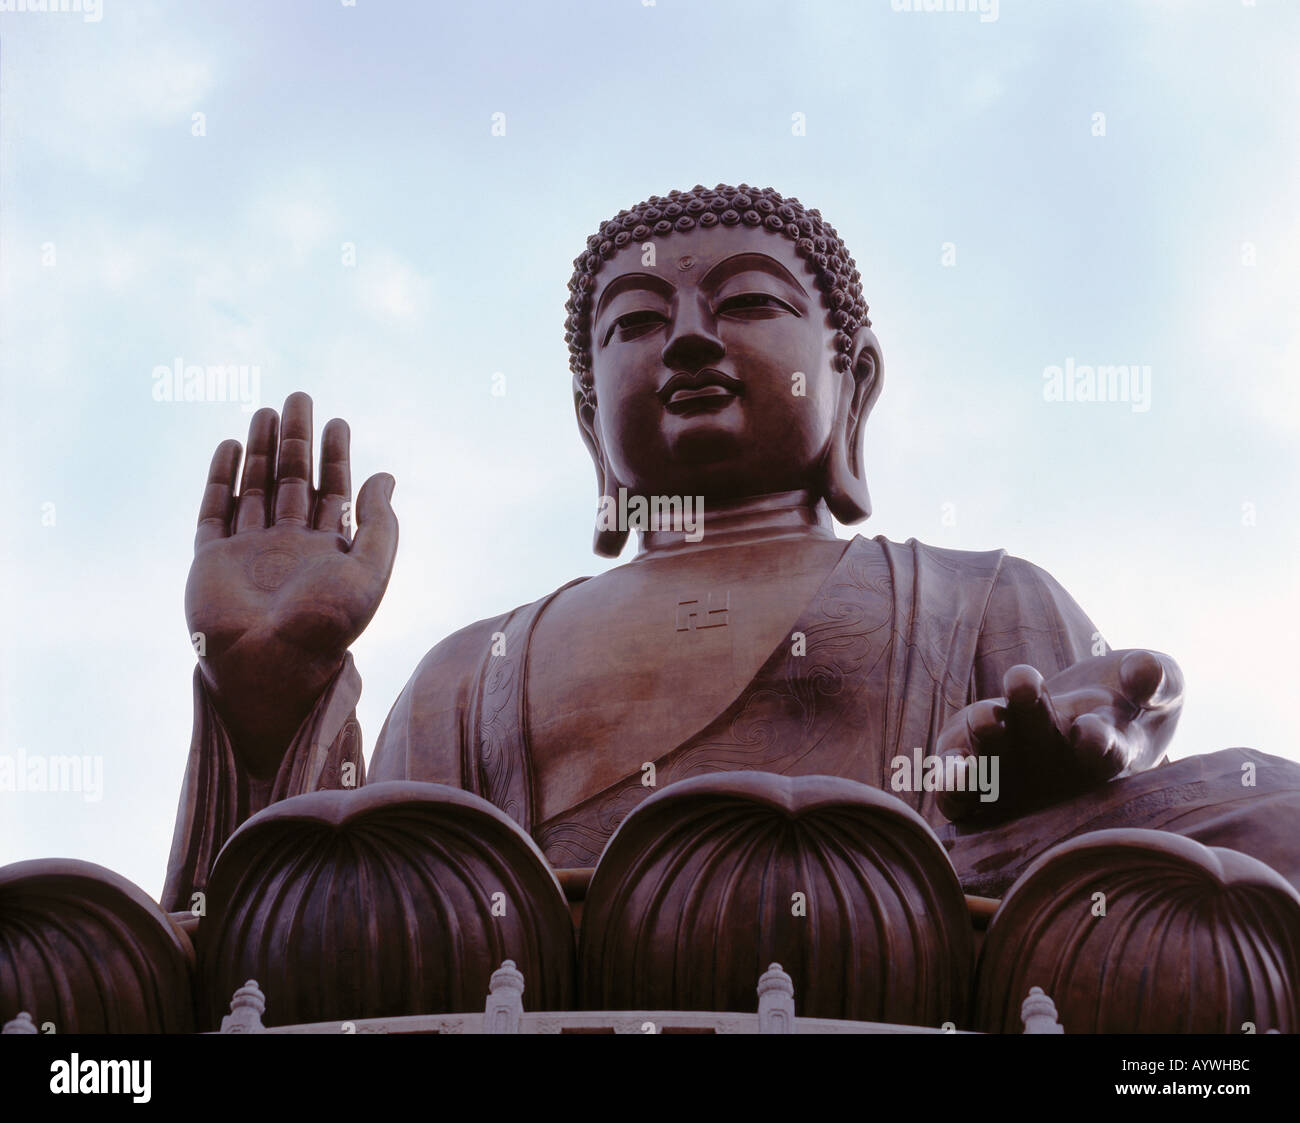 Himmelstempel mit Buddha-Statue, Bronzefigur, Insel Lantau, Hongkong Foto Stock